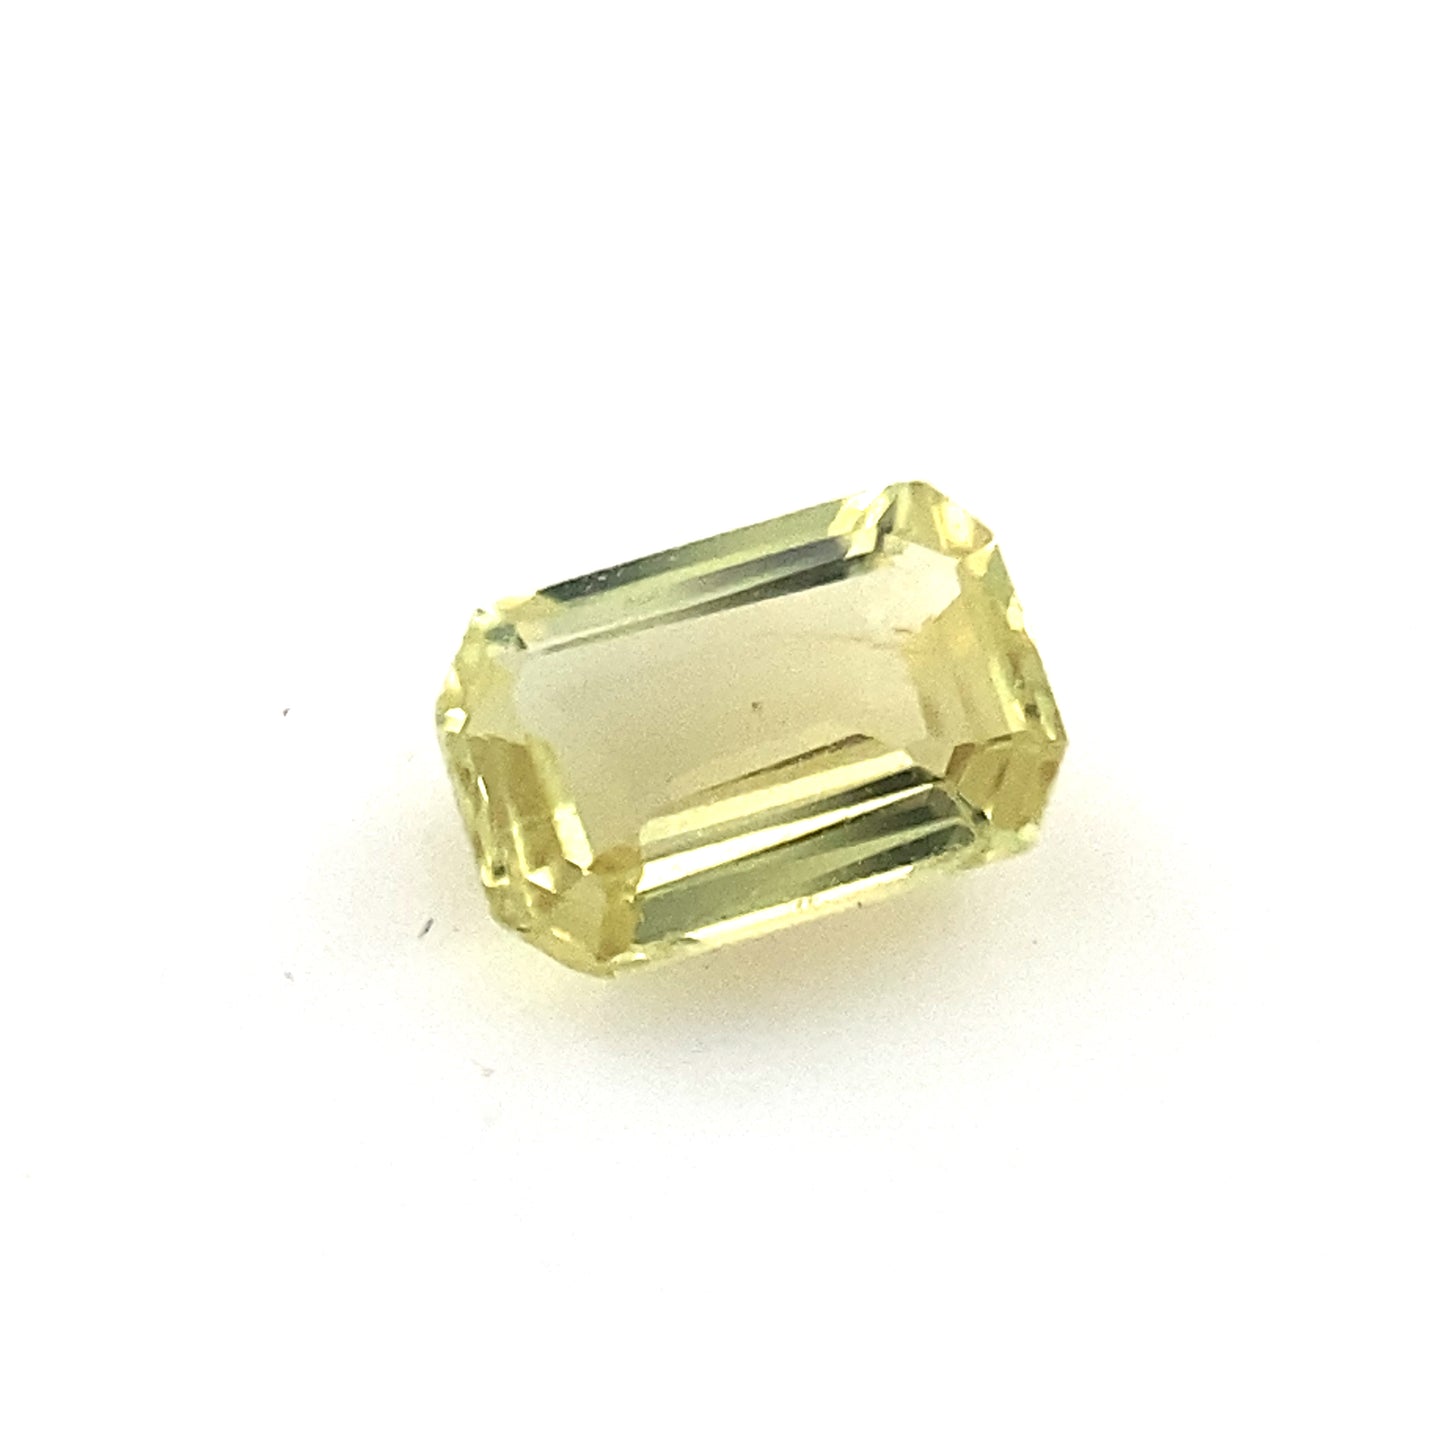 LOOSE STONE / 0.49ct emerald cut yellow sapphire / Total value 7,100 pesos